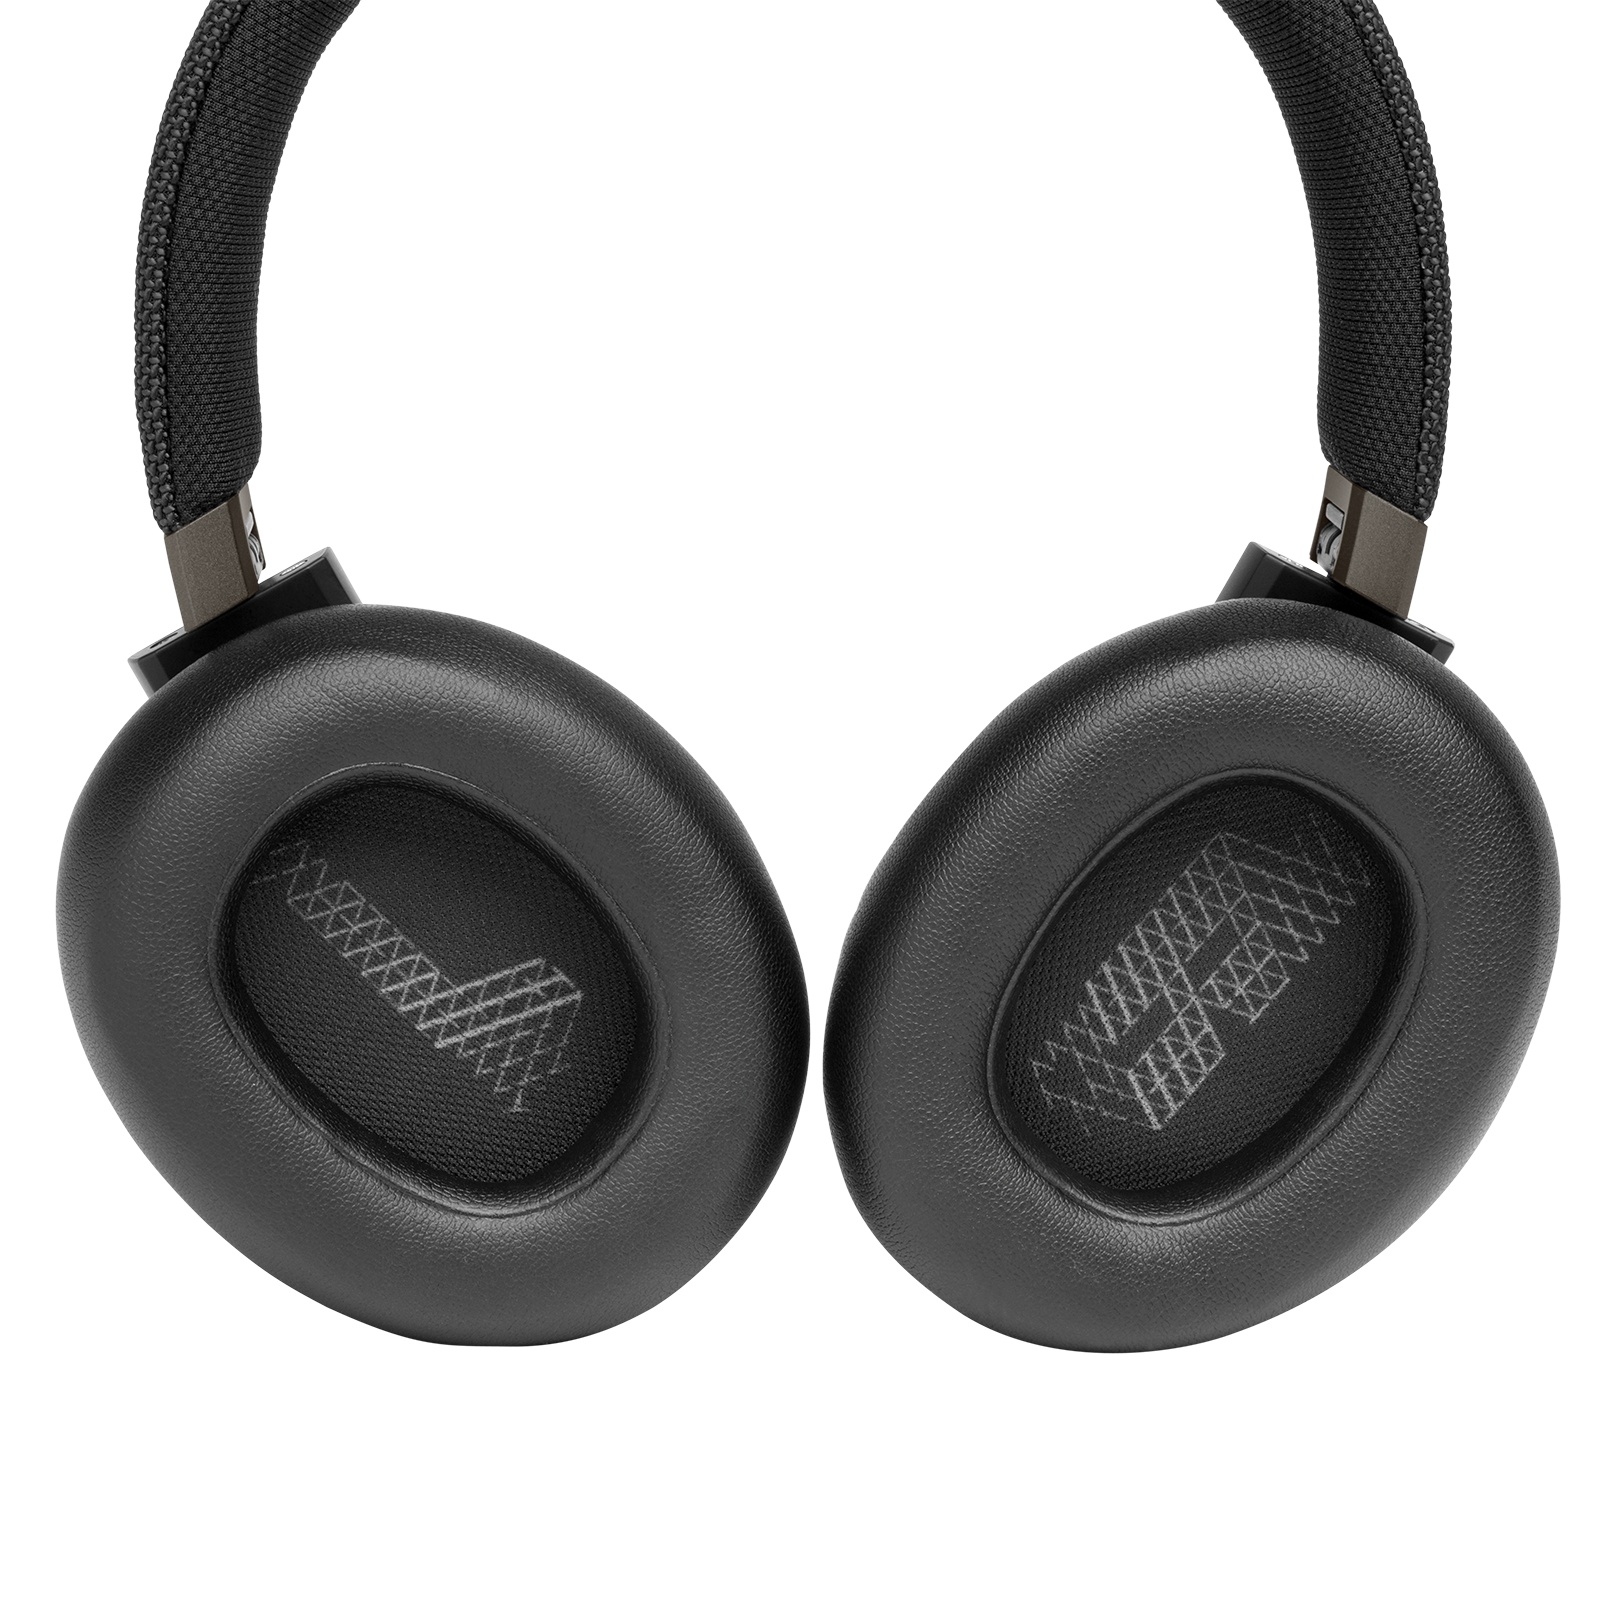 JBL Live 650BTNC - Black - Wireless Over-Ear Noise-Cancelling Headphones - Detailshot 3